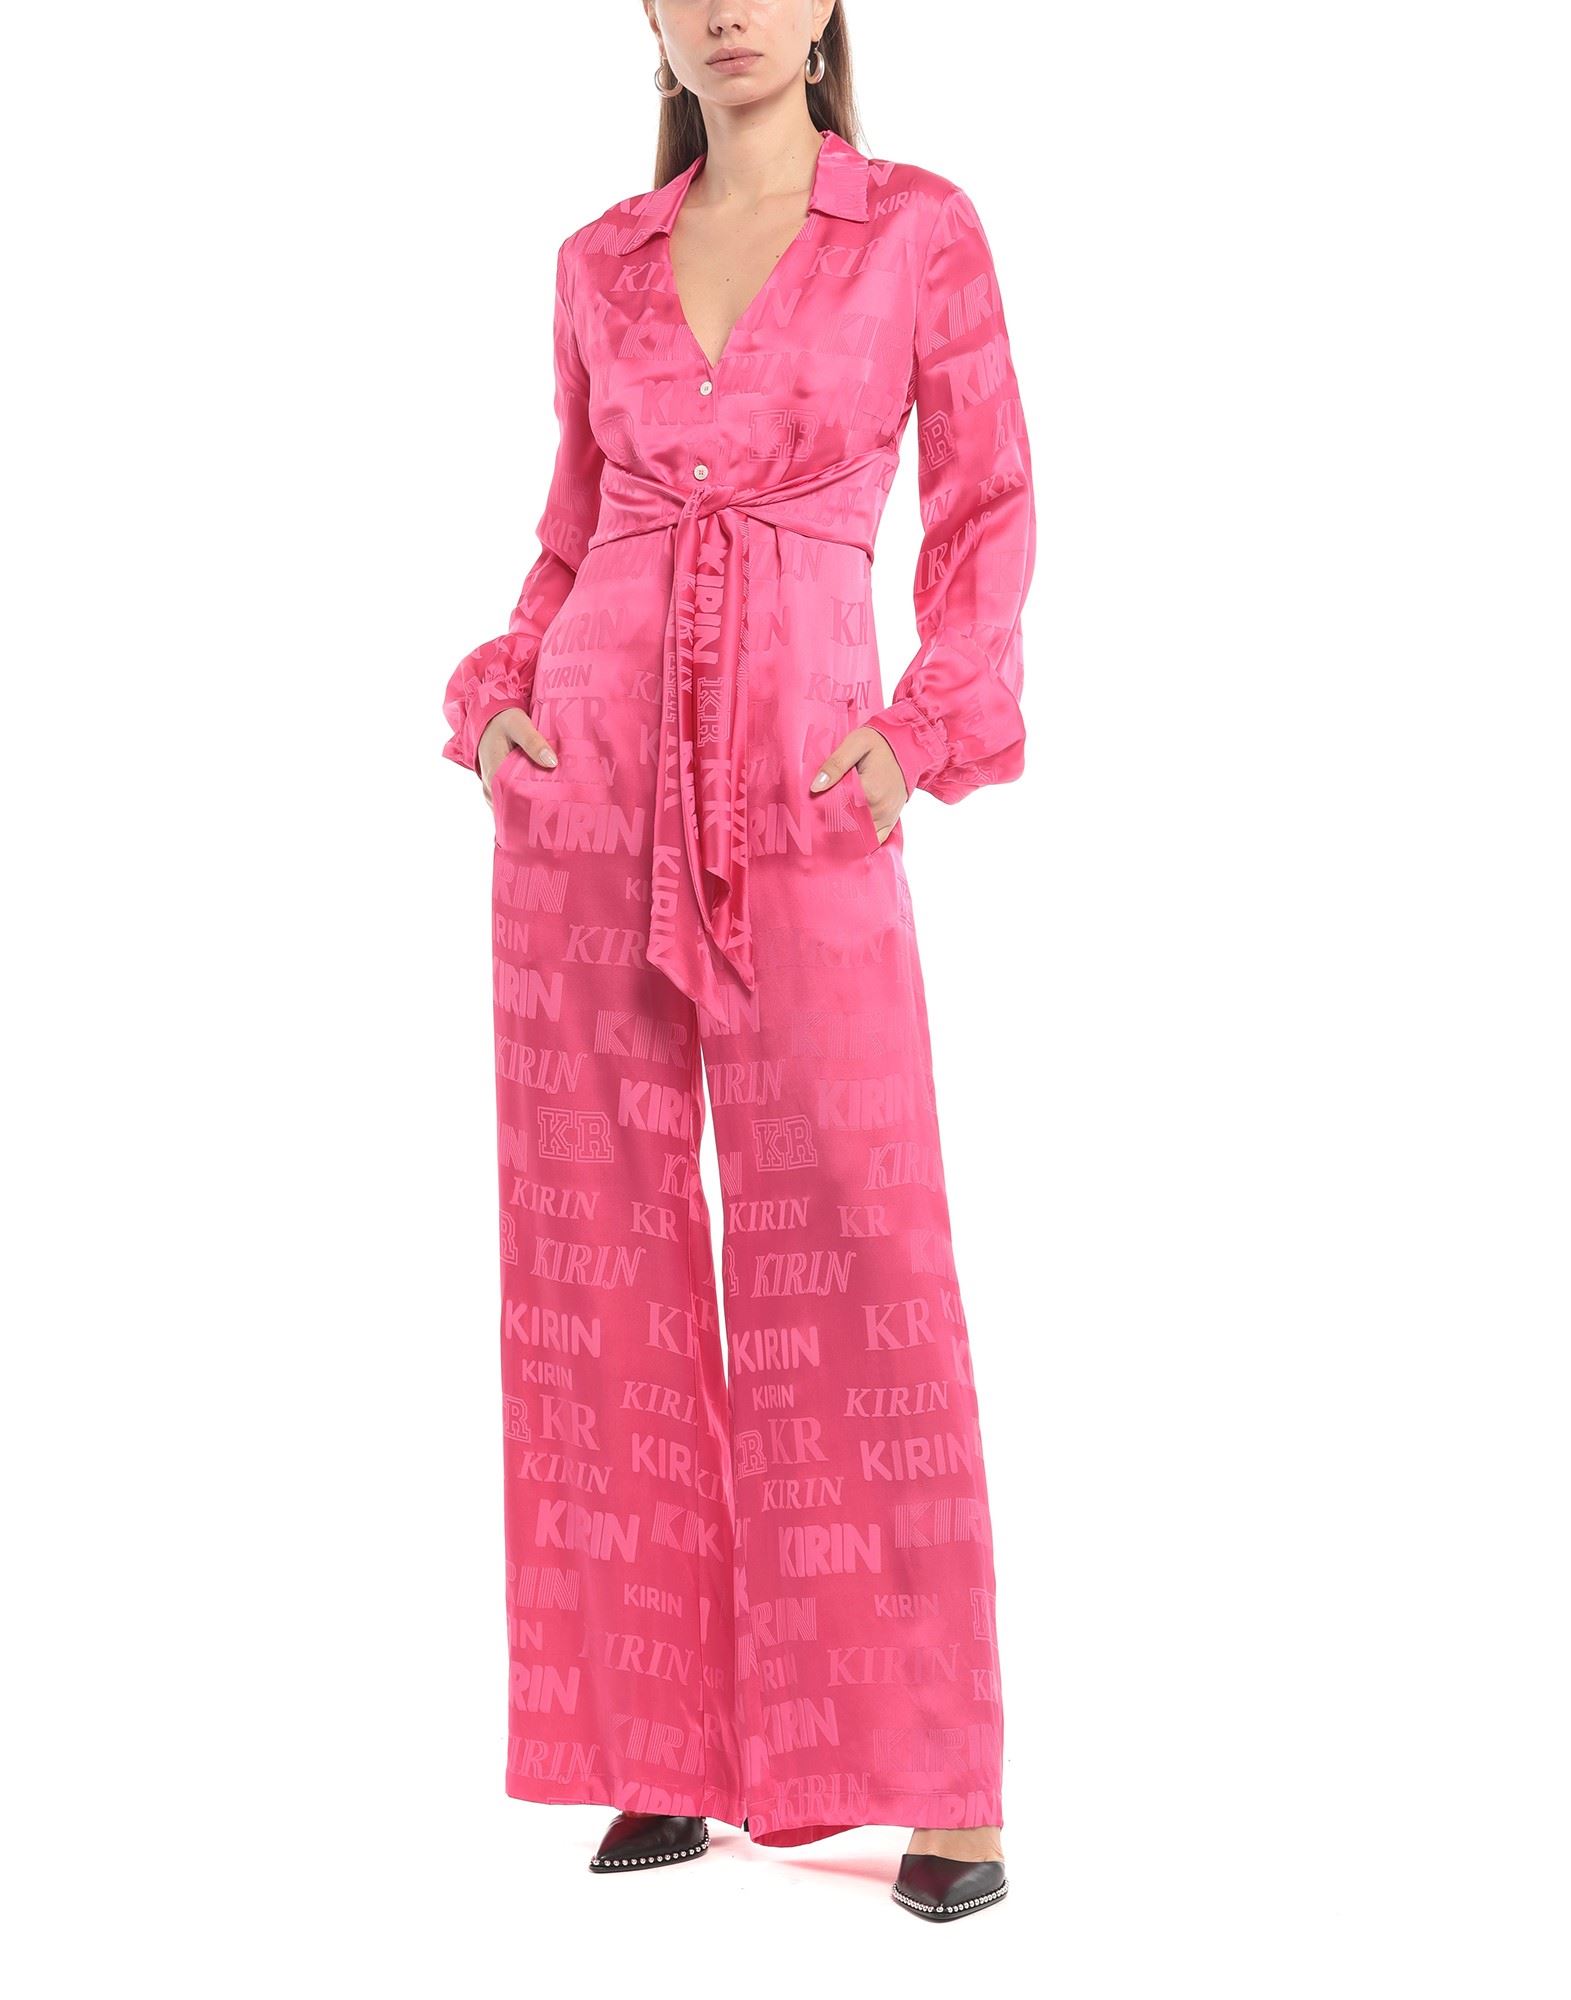 Kirin Peggy Gou Jumpsuits In Pink